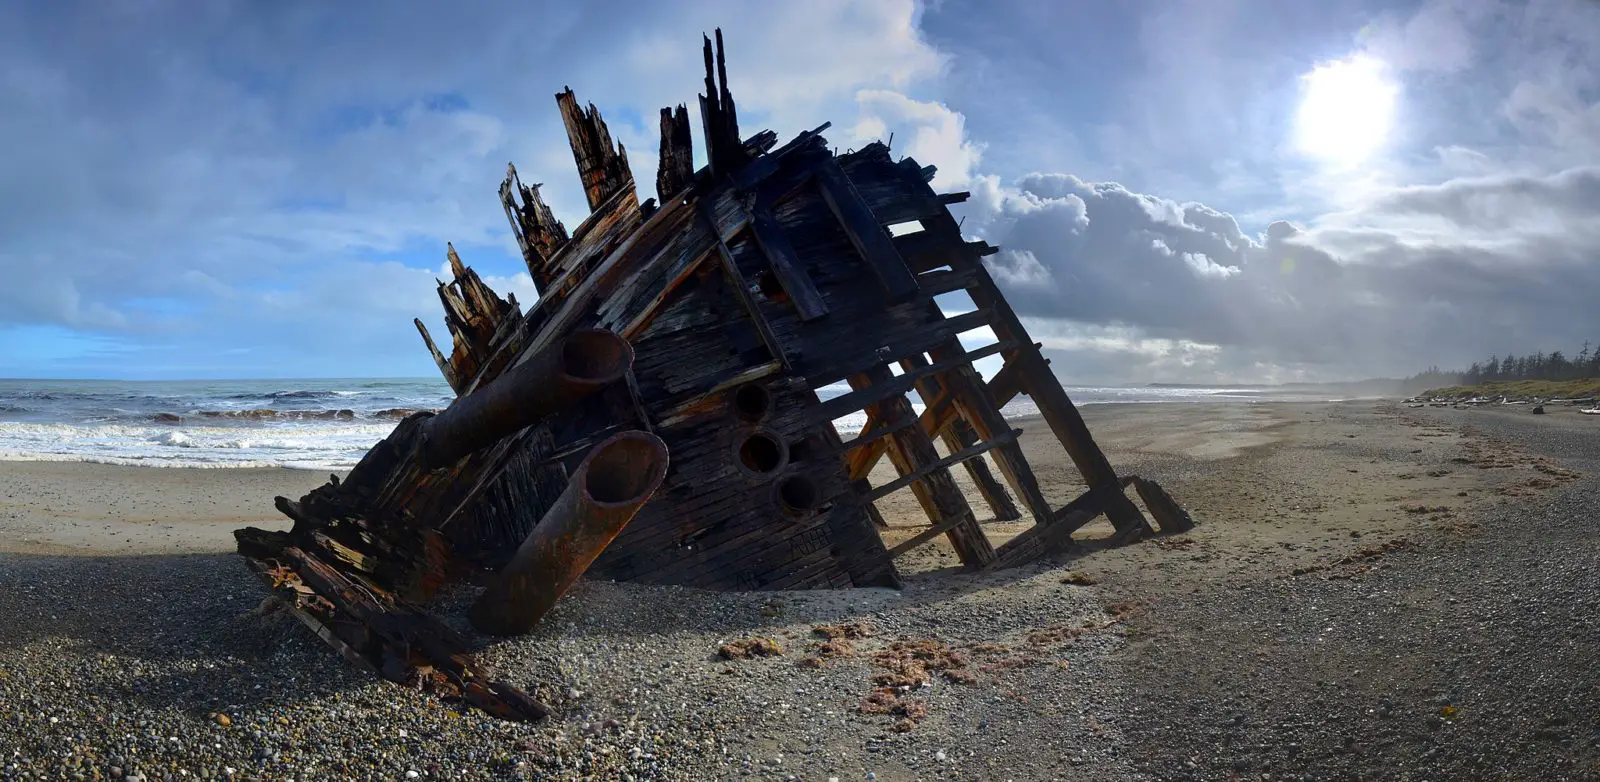 Pesuta Shipwreck in Naikoon Provincial Park, Haida Gwaii - Photo: James Stewart (CC)